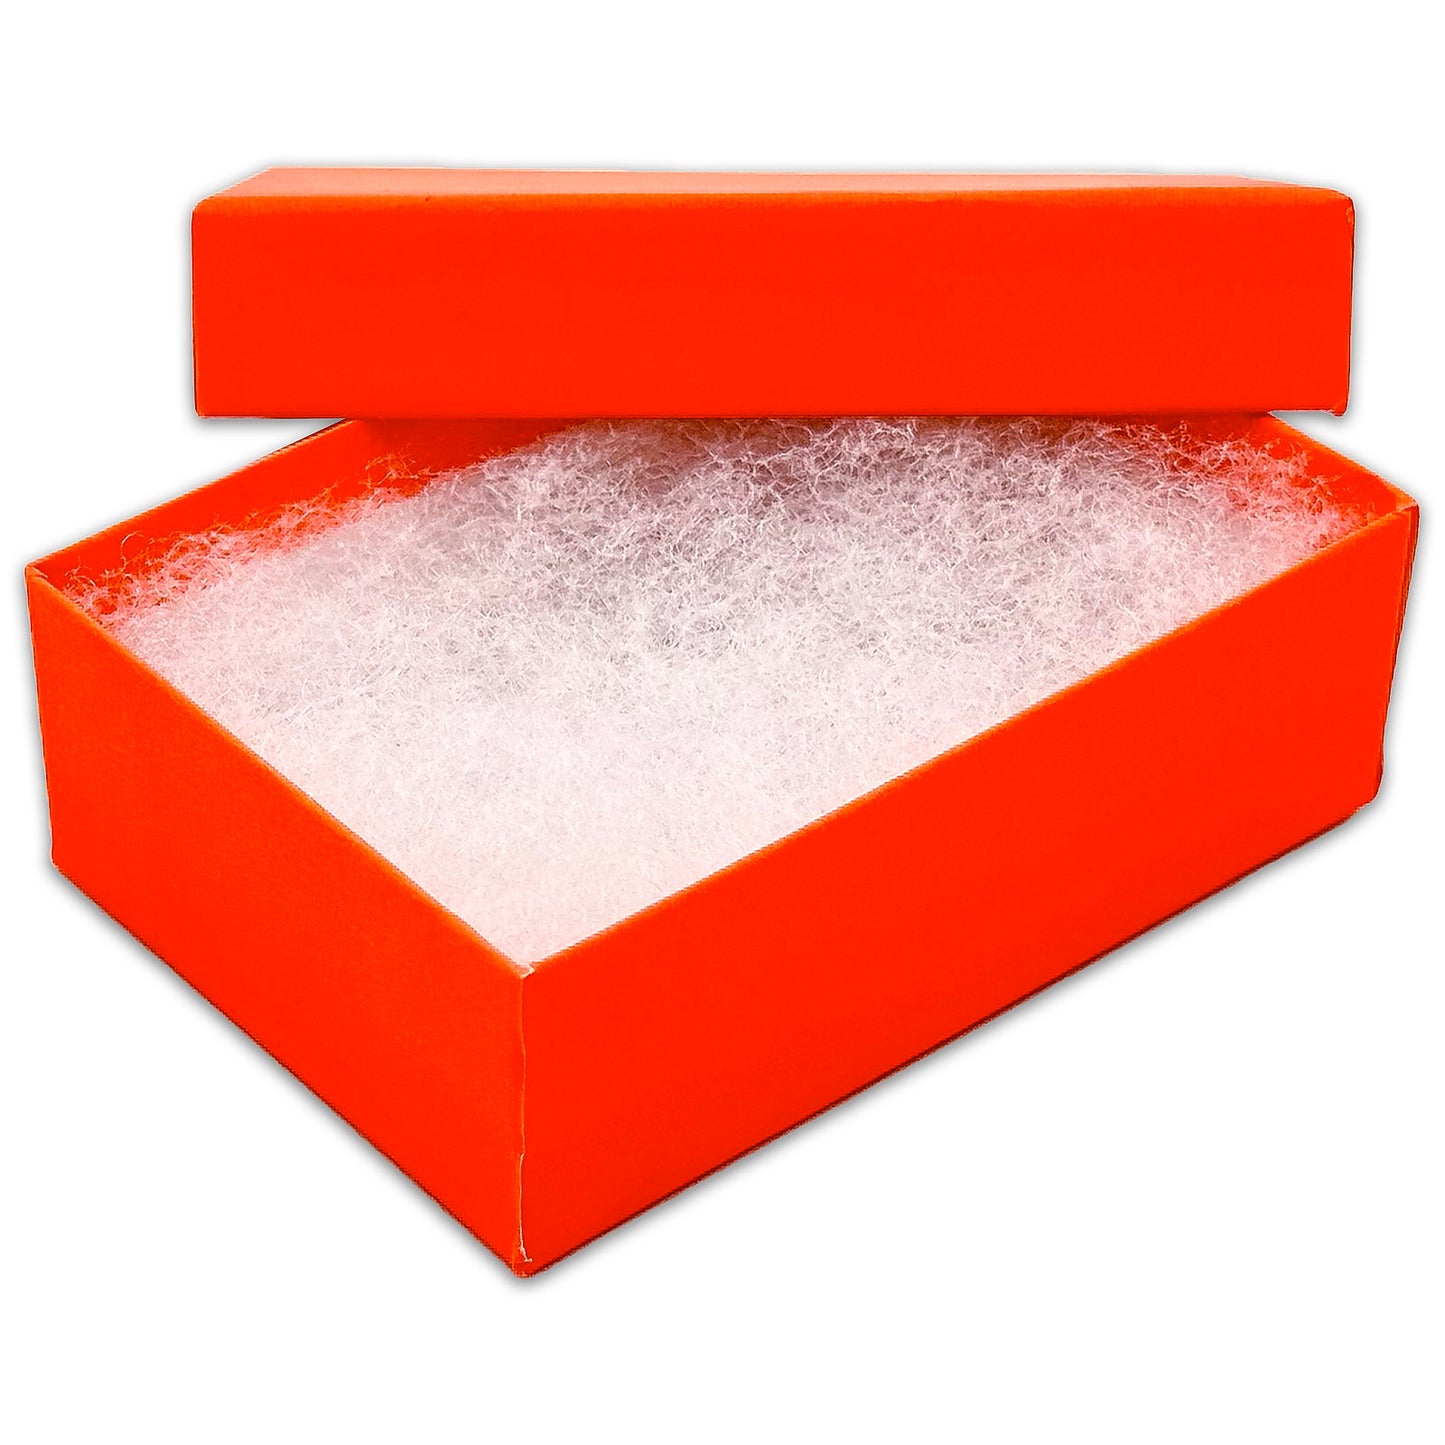 3 1/4" x 2 1/4" x 1" Neon Orange Cotton Filled Paper Box